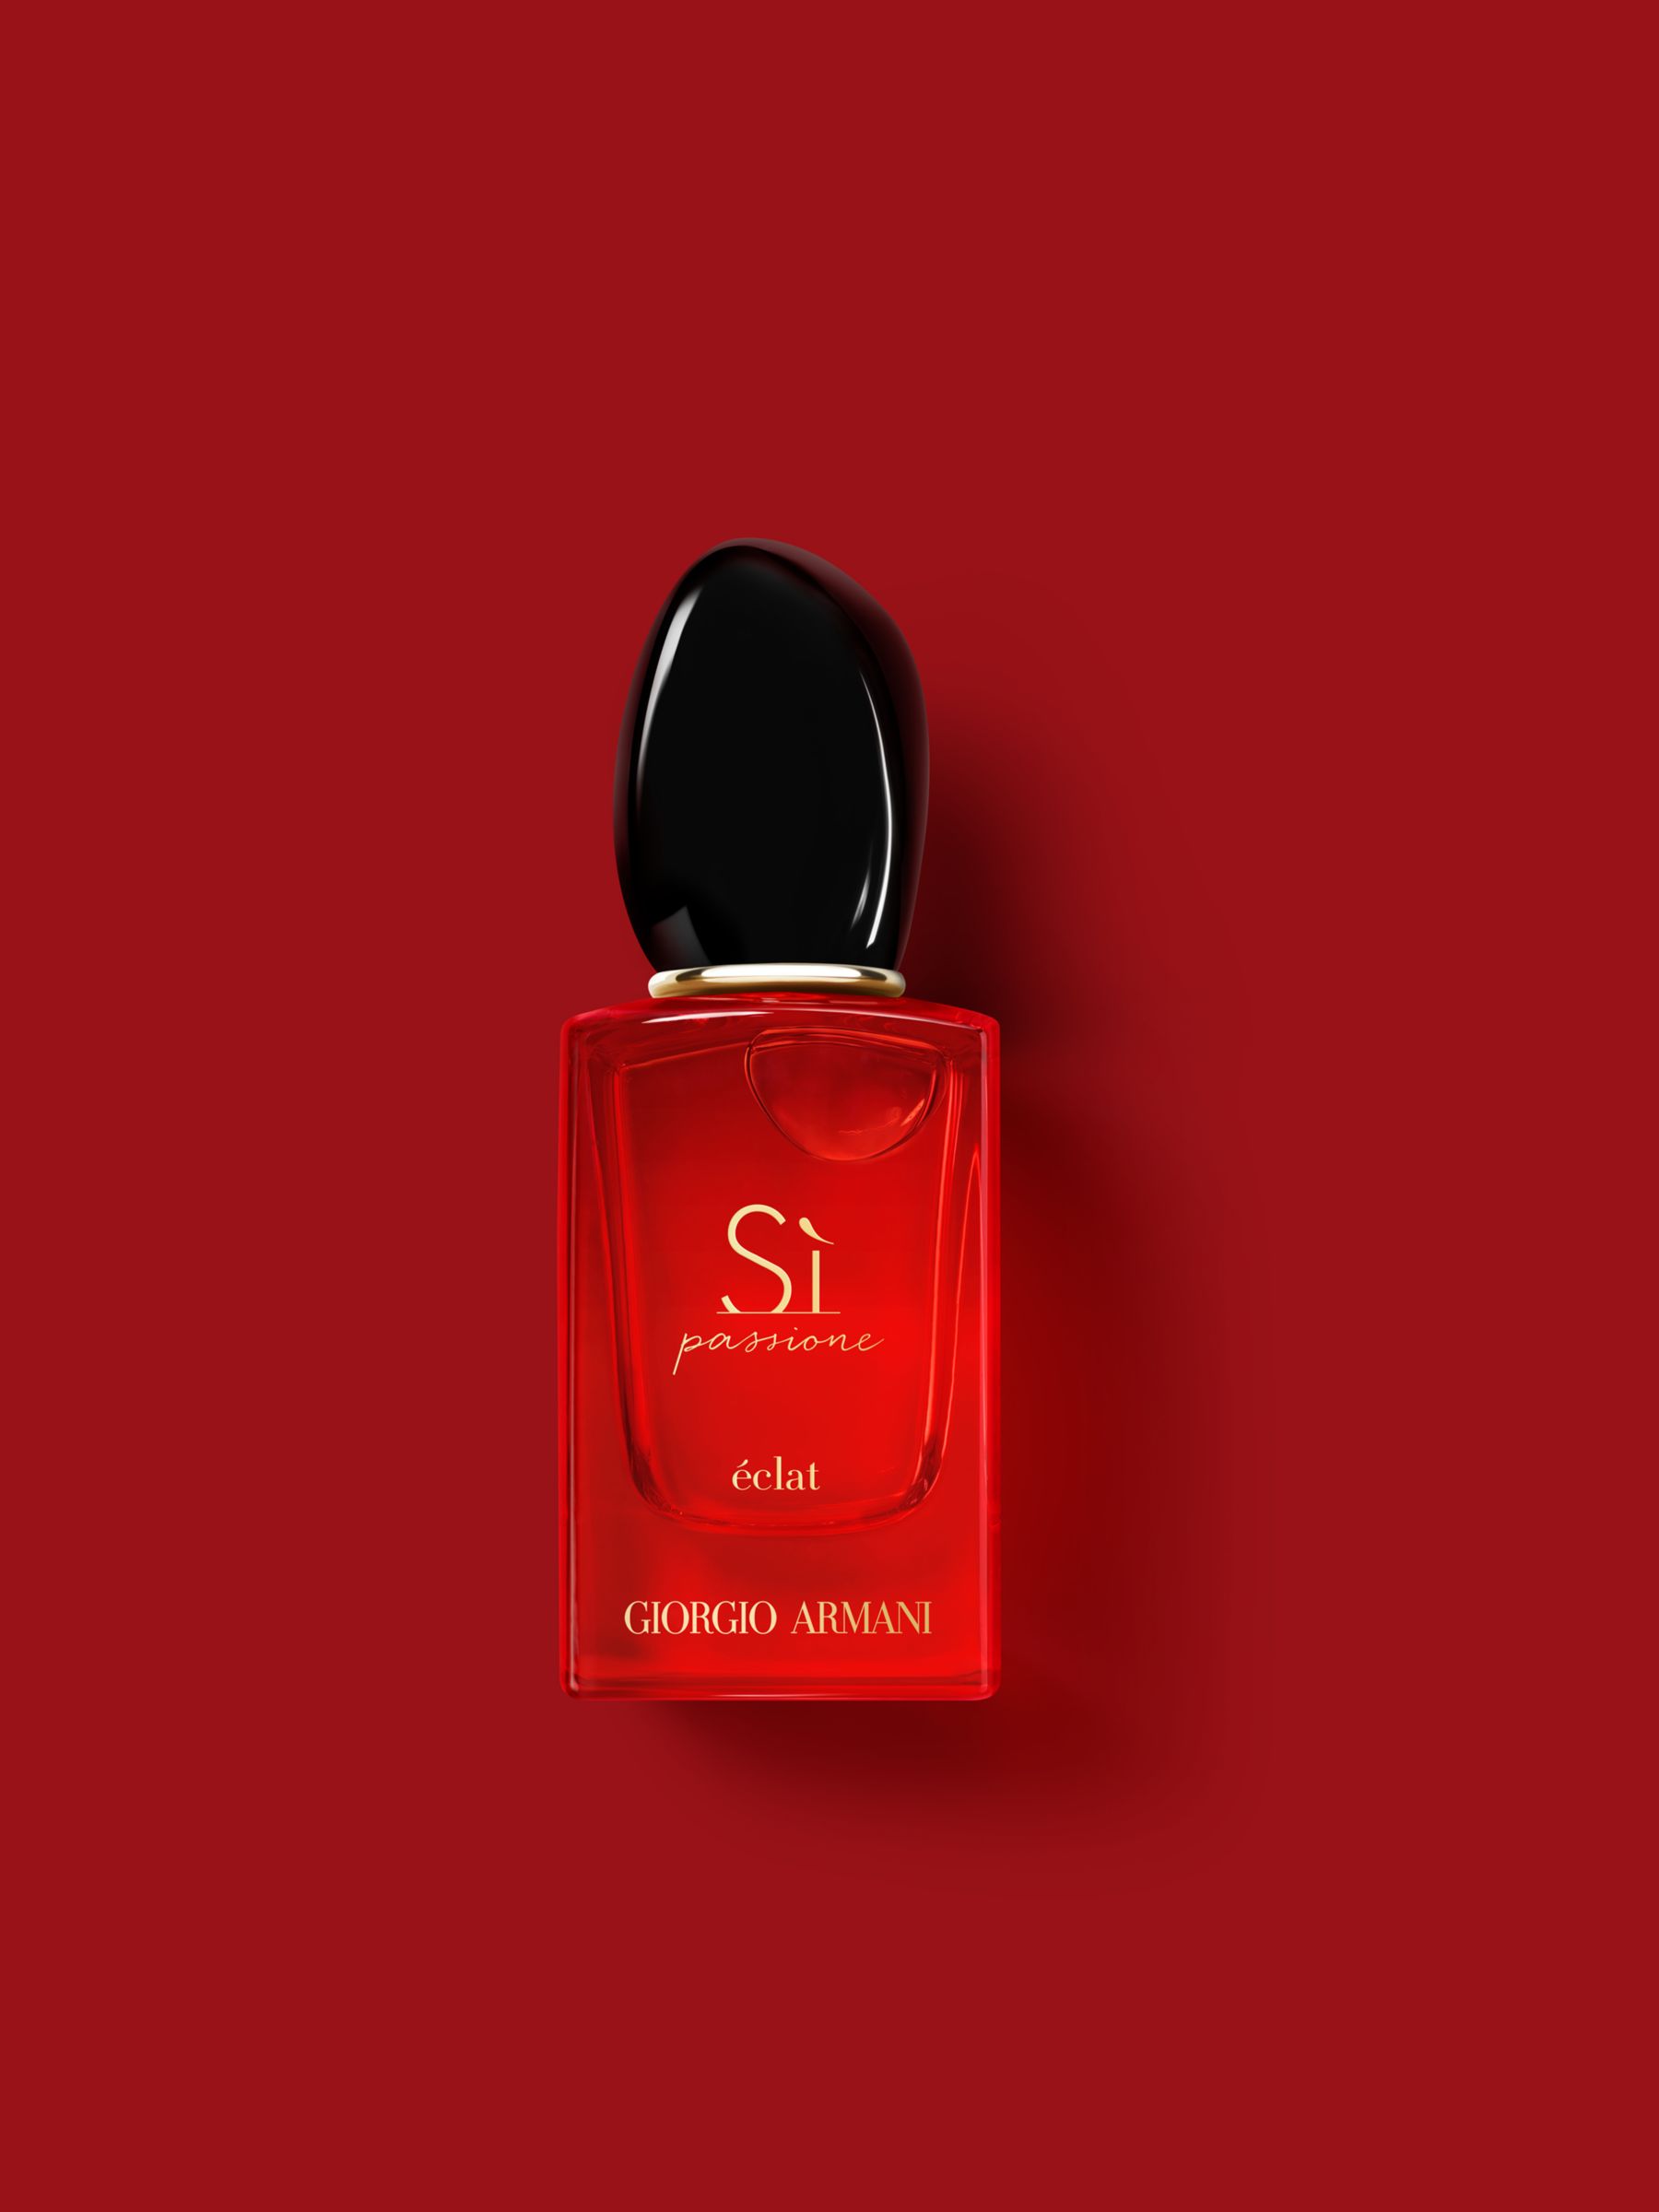 Giorgio Armani Si Passione Eclat Eau de Parfum, 30ml at John Lewis ...